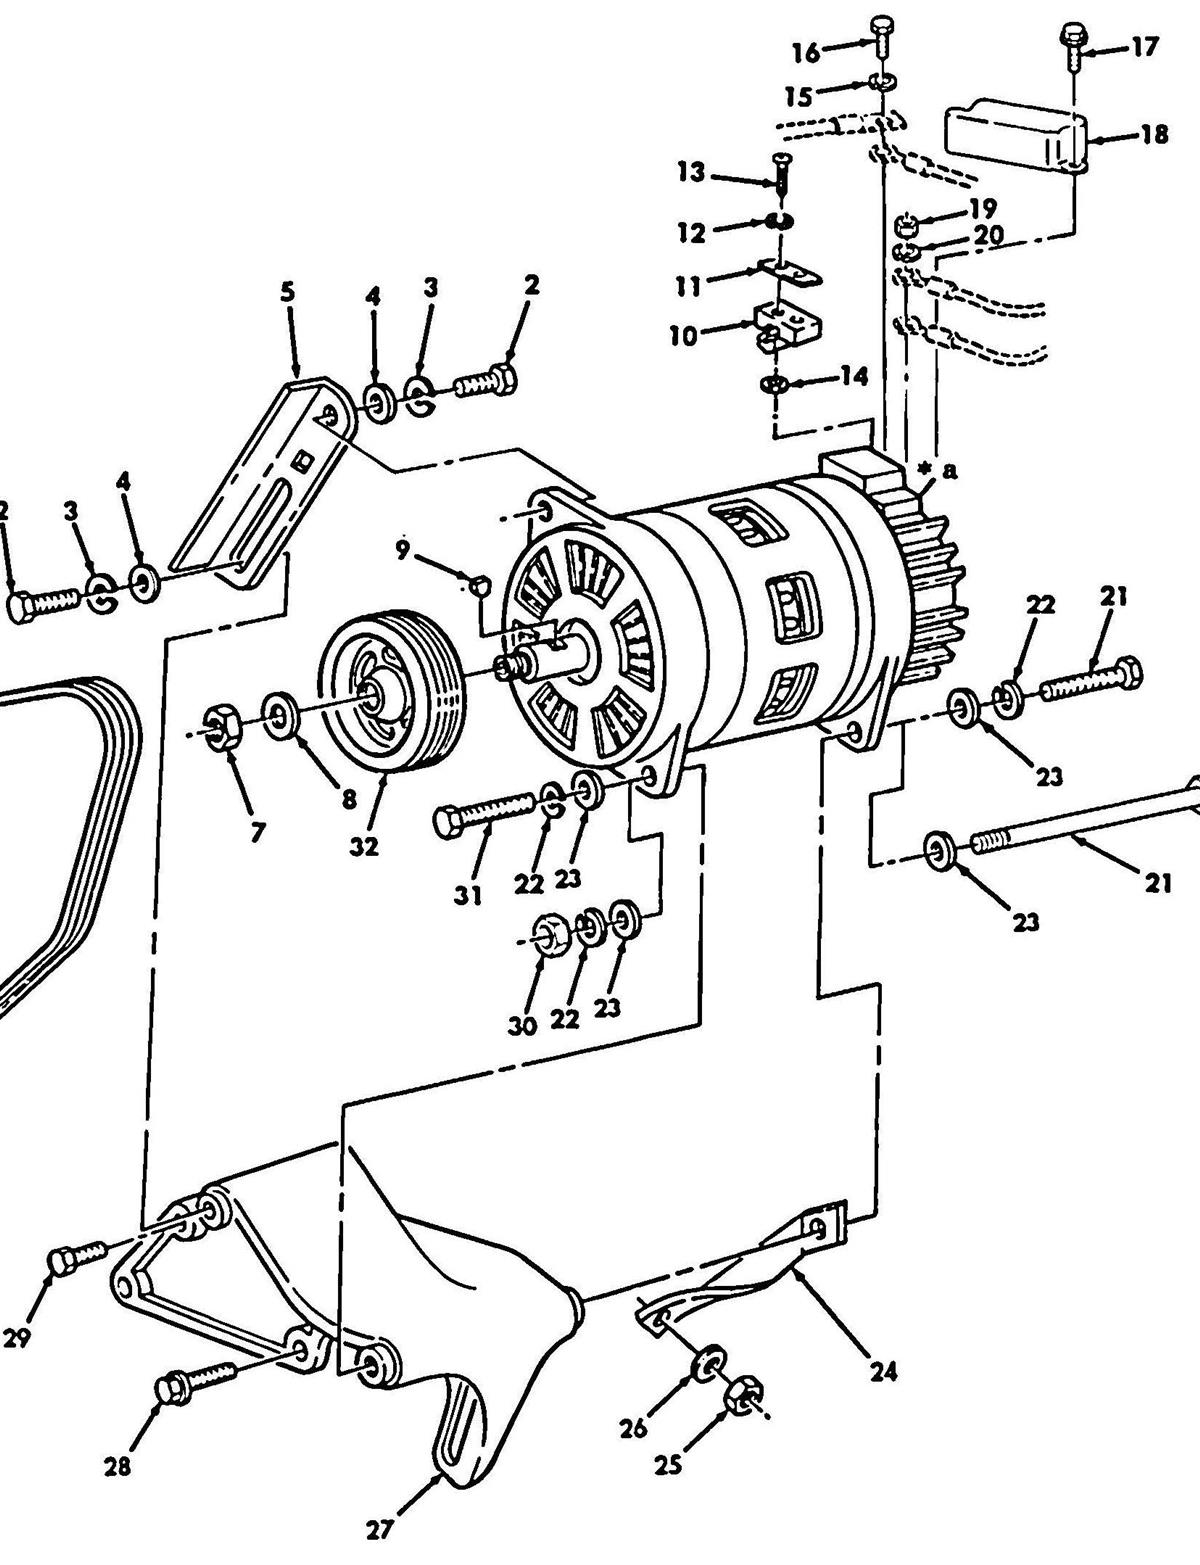 HM-471 | 5340-01-293-0125 alternator mounting bracket HMMWV (4).jpg